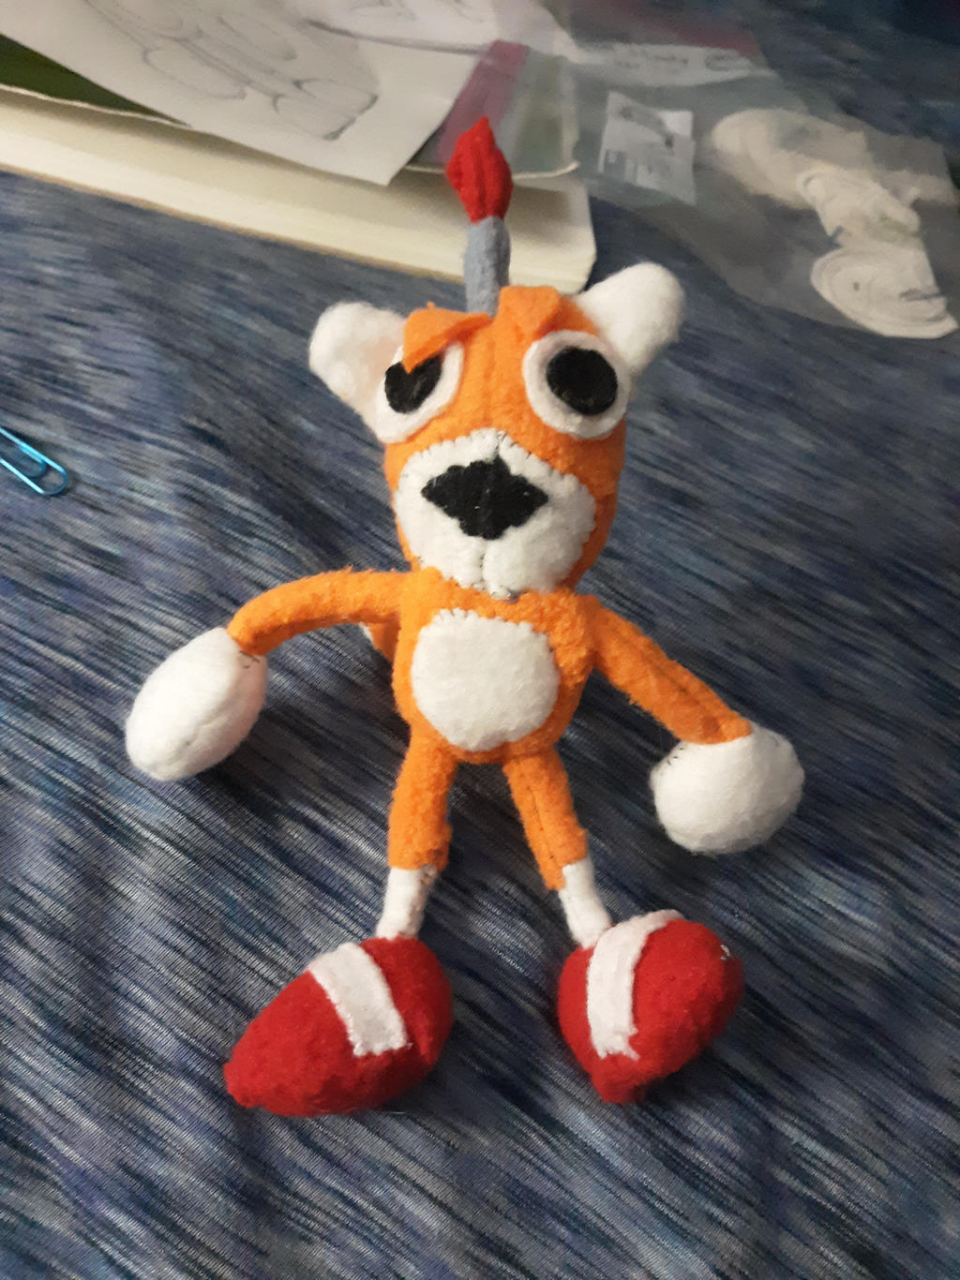 Tails Doll is Terrifying : r/SonicTheHedgehog